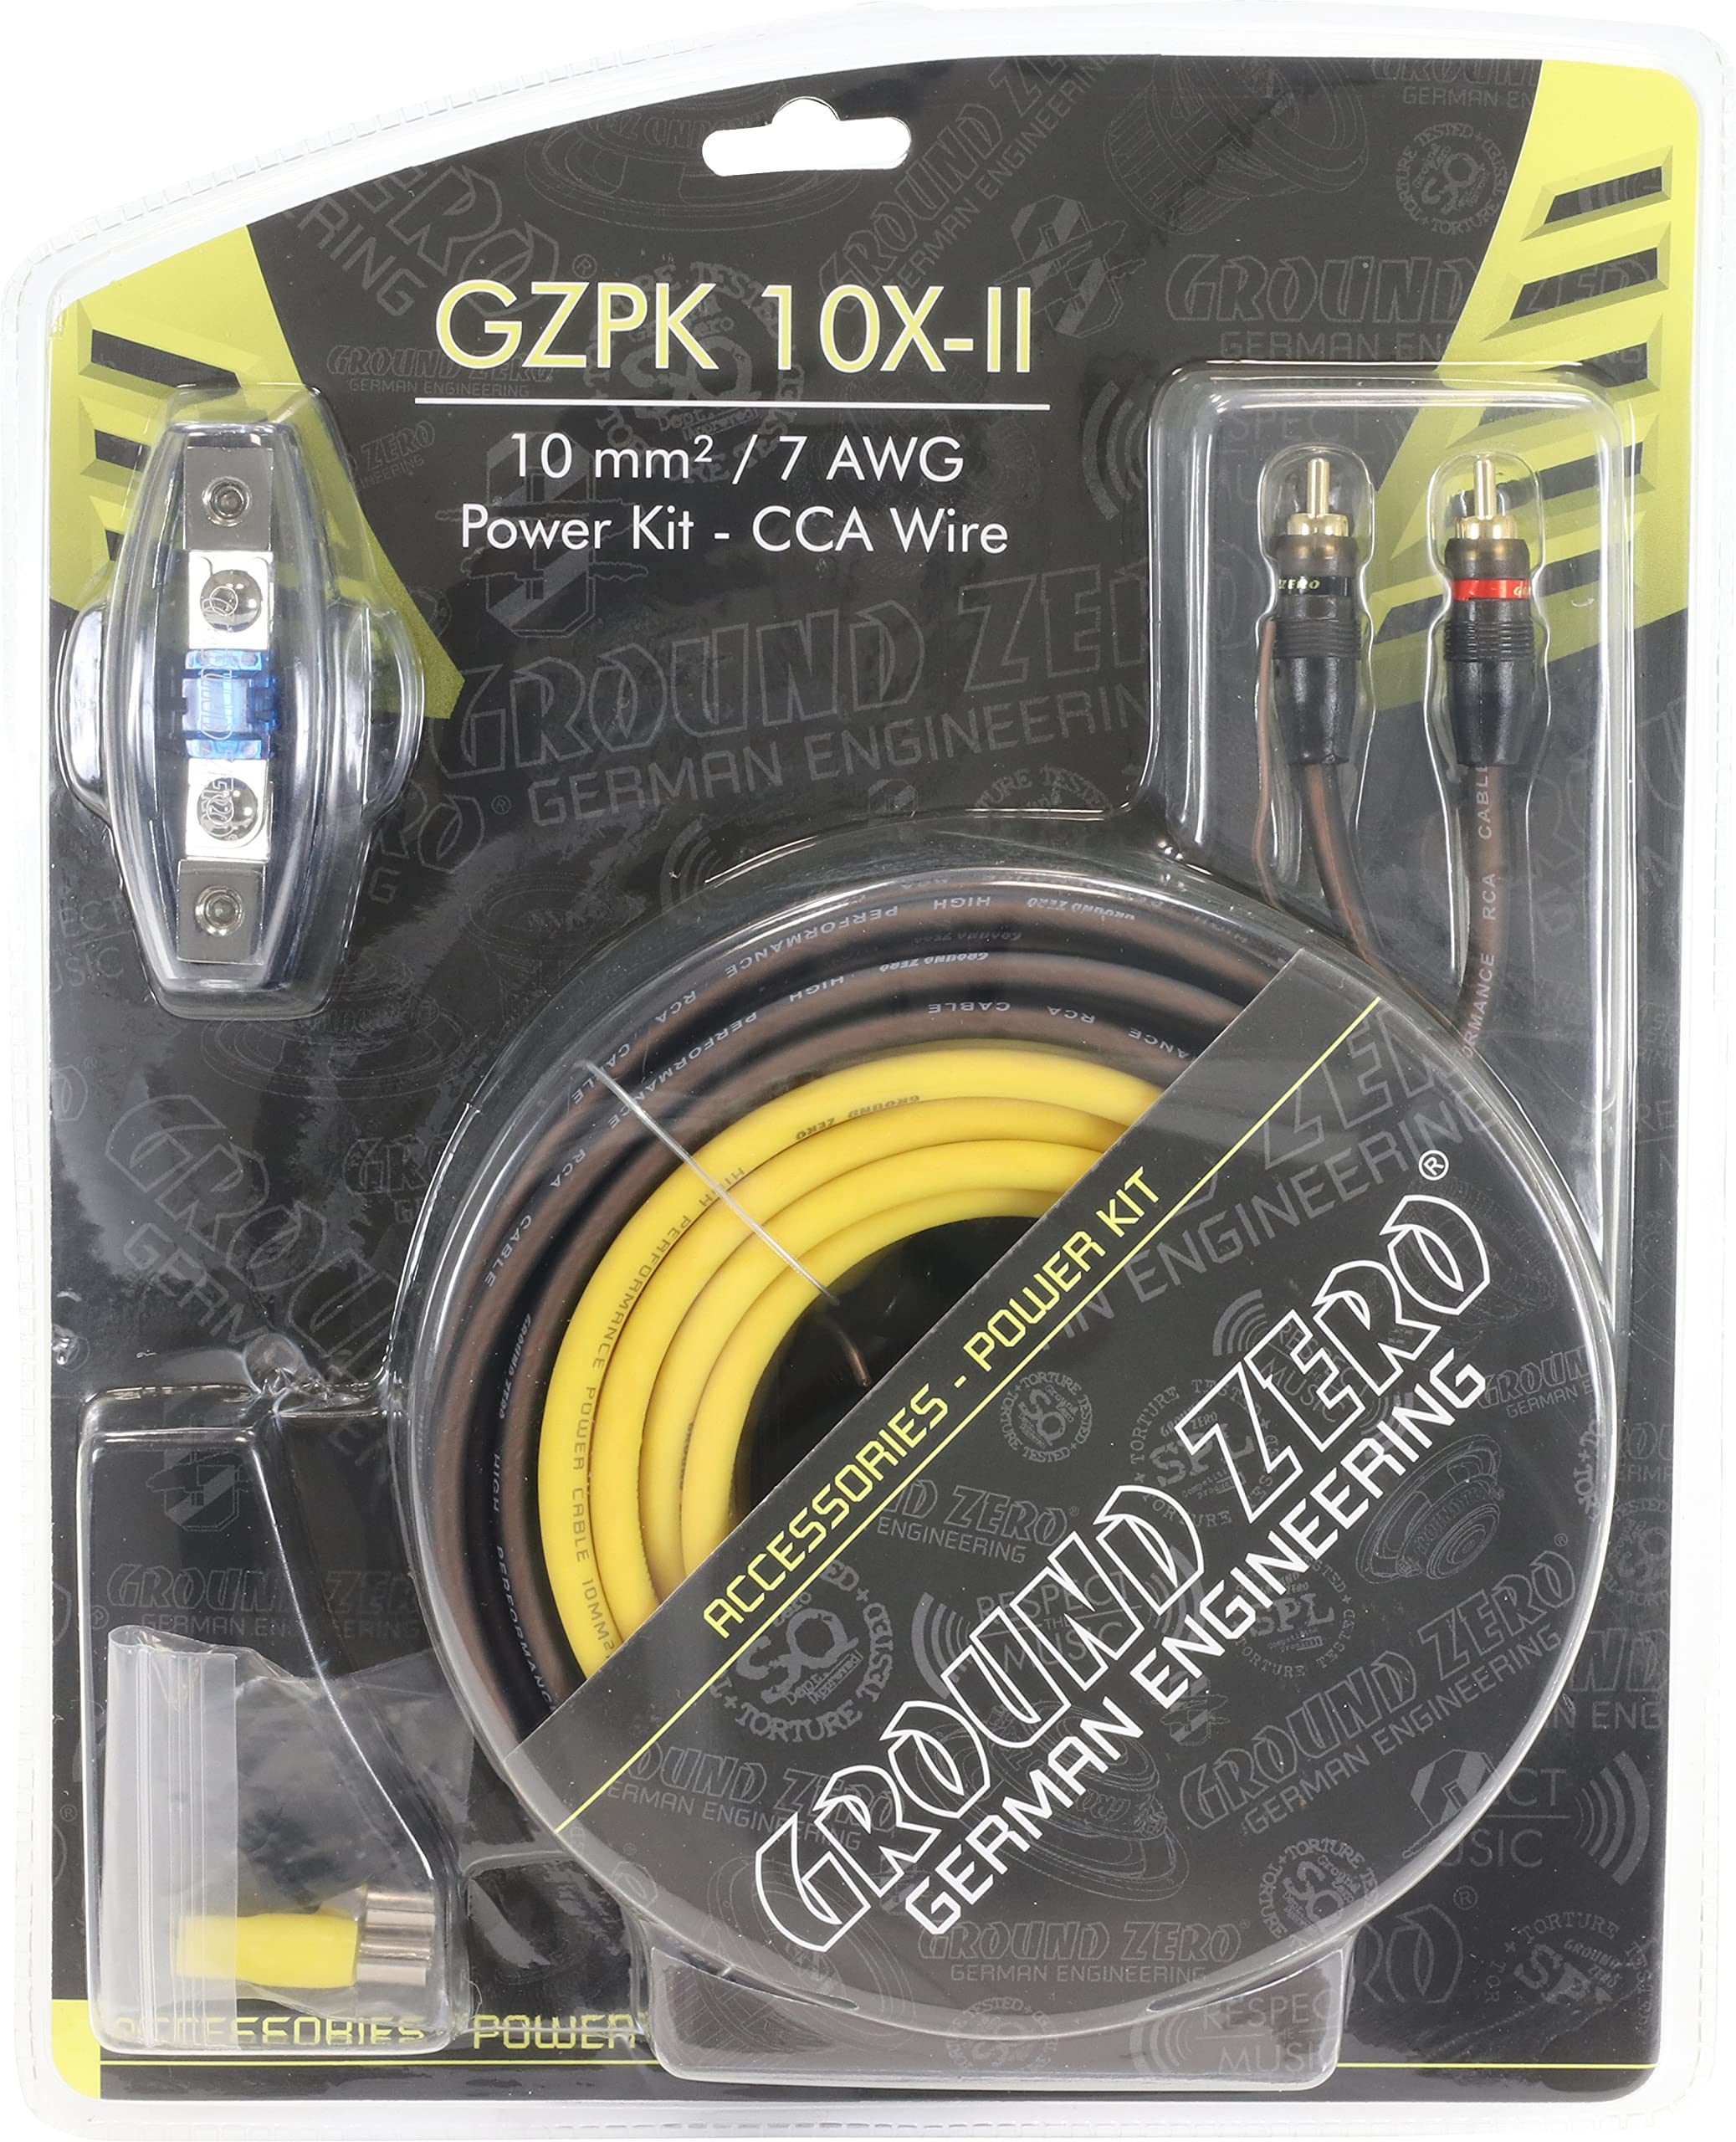 GROUND ZERO GZPK10X-II 10mm Kabelset - Kabelkit CarHifi Anschlusset